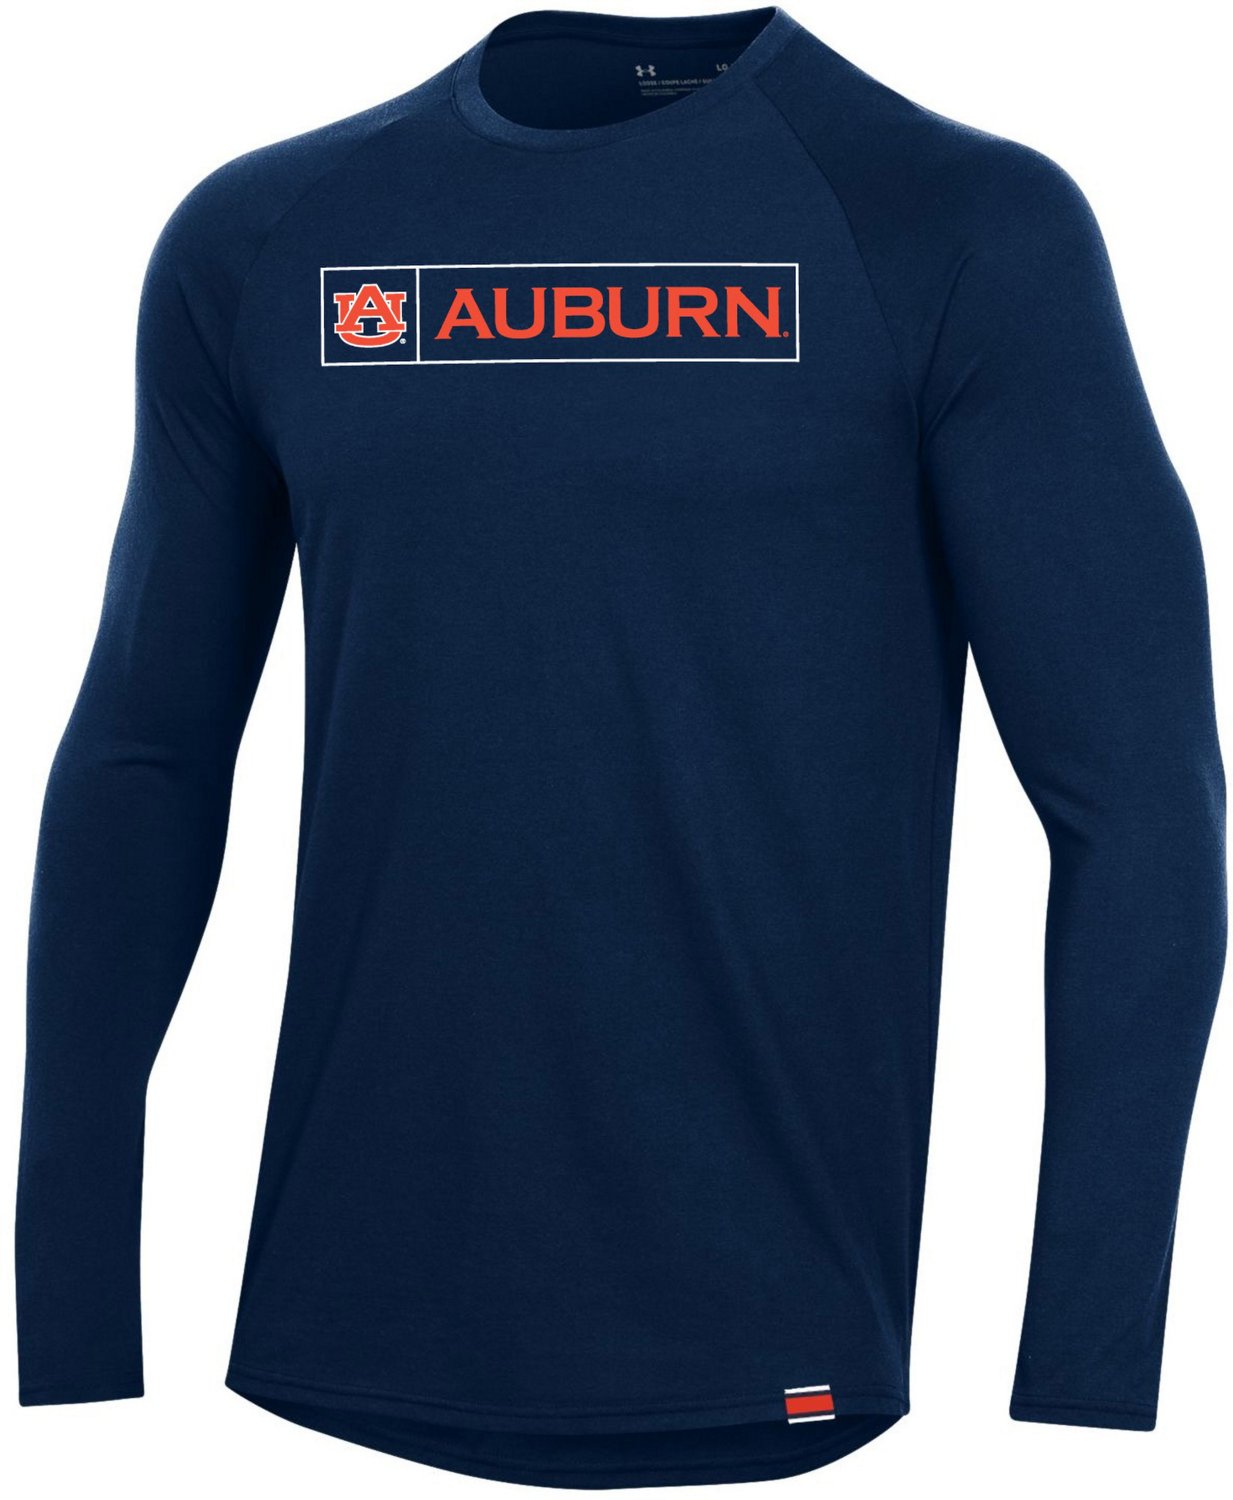 Under Armour Men's Auburn University Pinnacle Long-Sleeve Graphic T ...